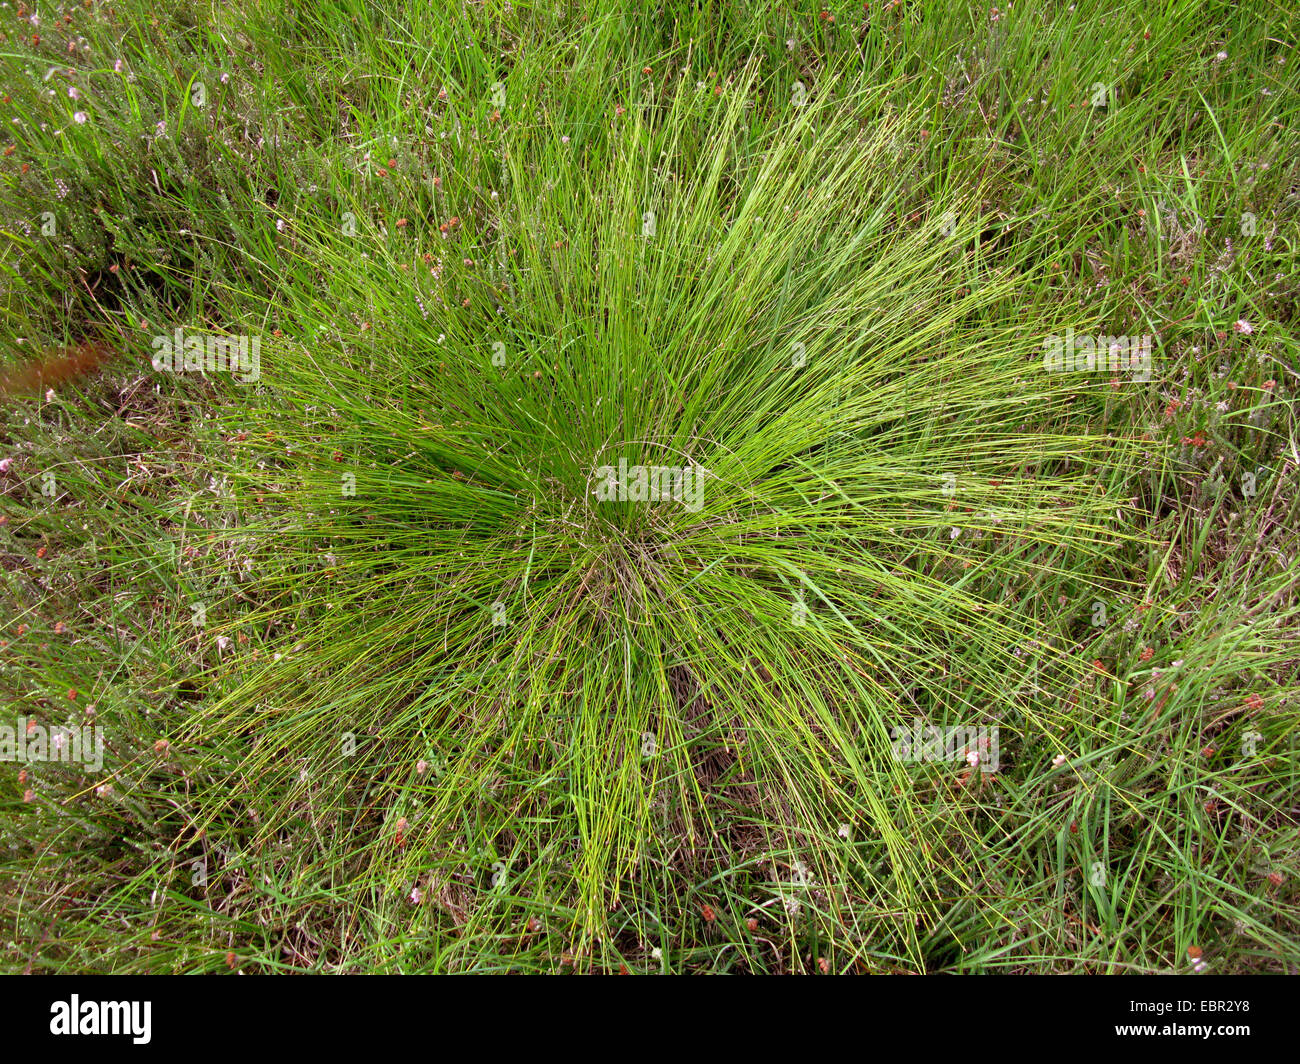 Deergrass, Deer's hair (Trichophorum cespitosum germanicum, Trichophorum ssp. germanicum), vue d'en haut, l'ALLEMAGNE, Basse-Saxe Banque D'Images